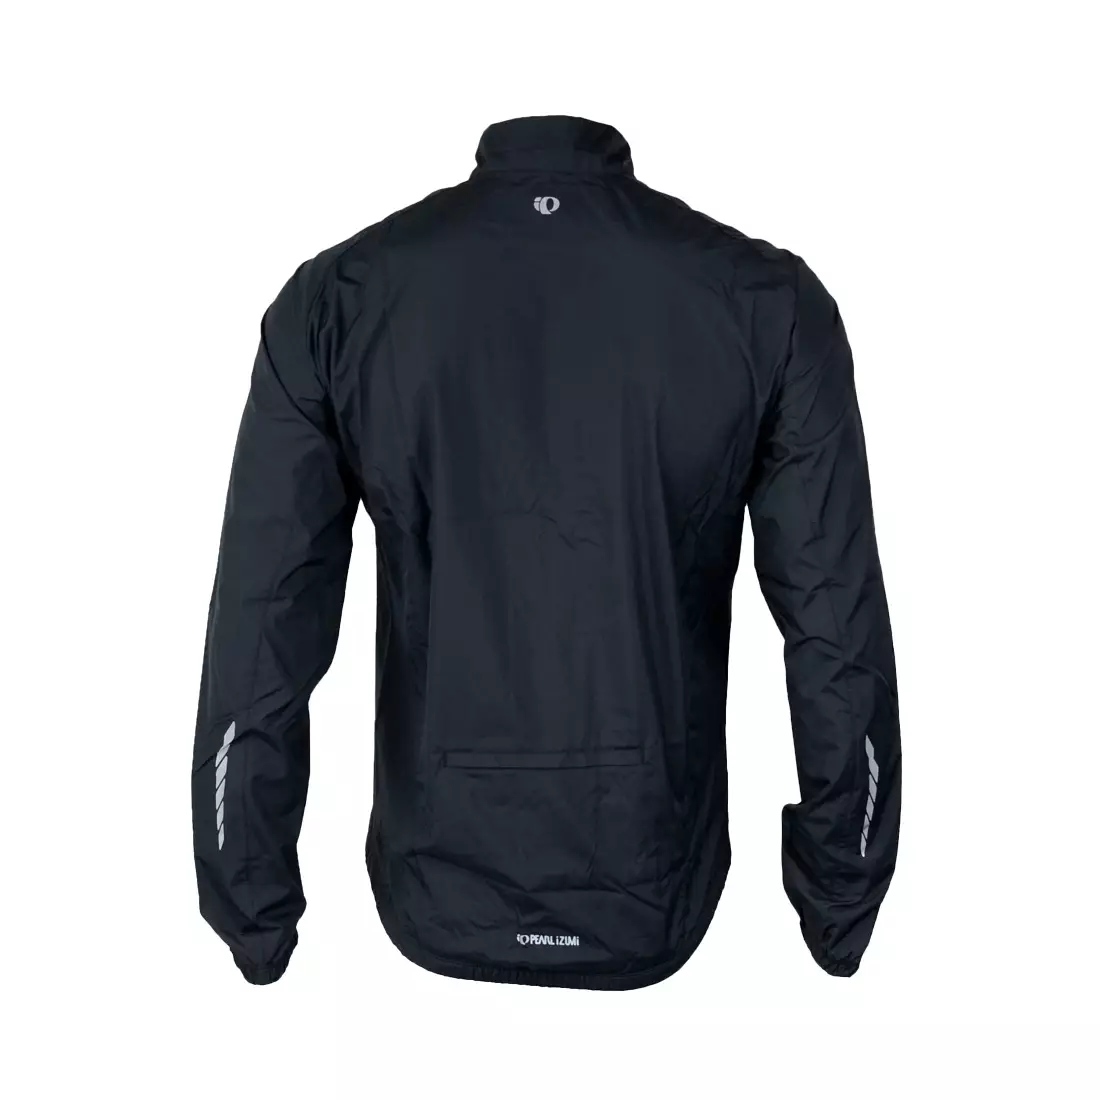 PEARL IZUMI - SELECT Barrier Jacket 11131335-021 - pánska cyklistická bunda - farba: Čierna